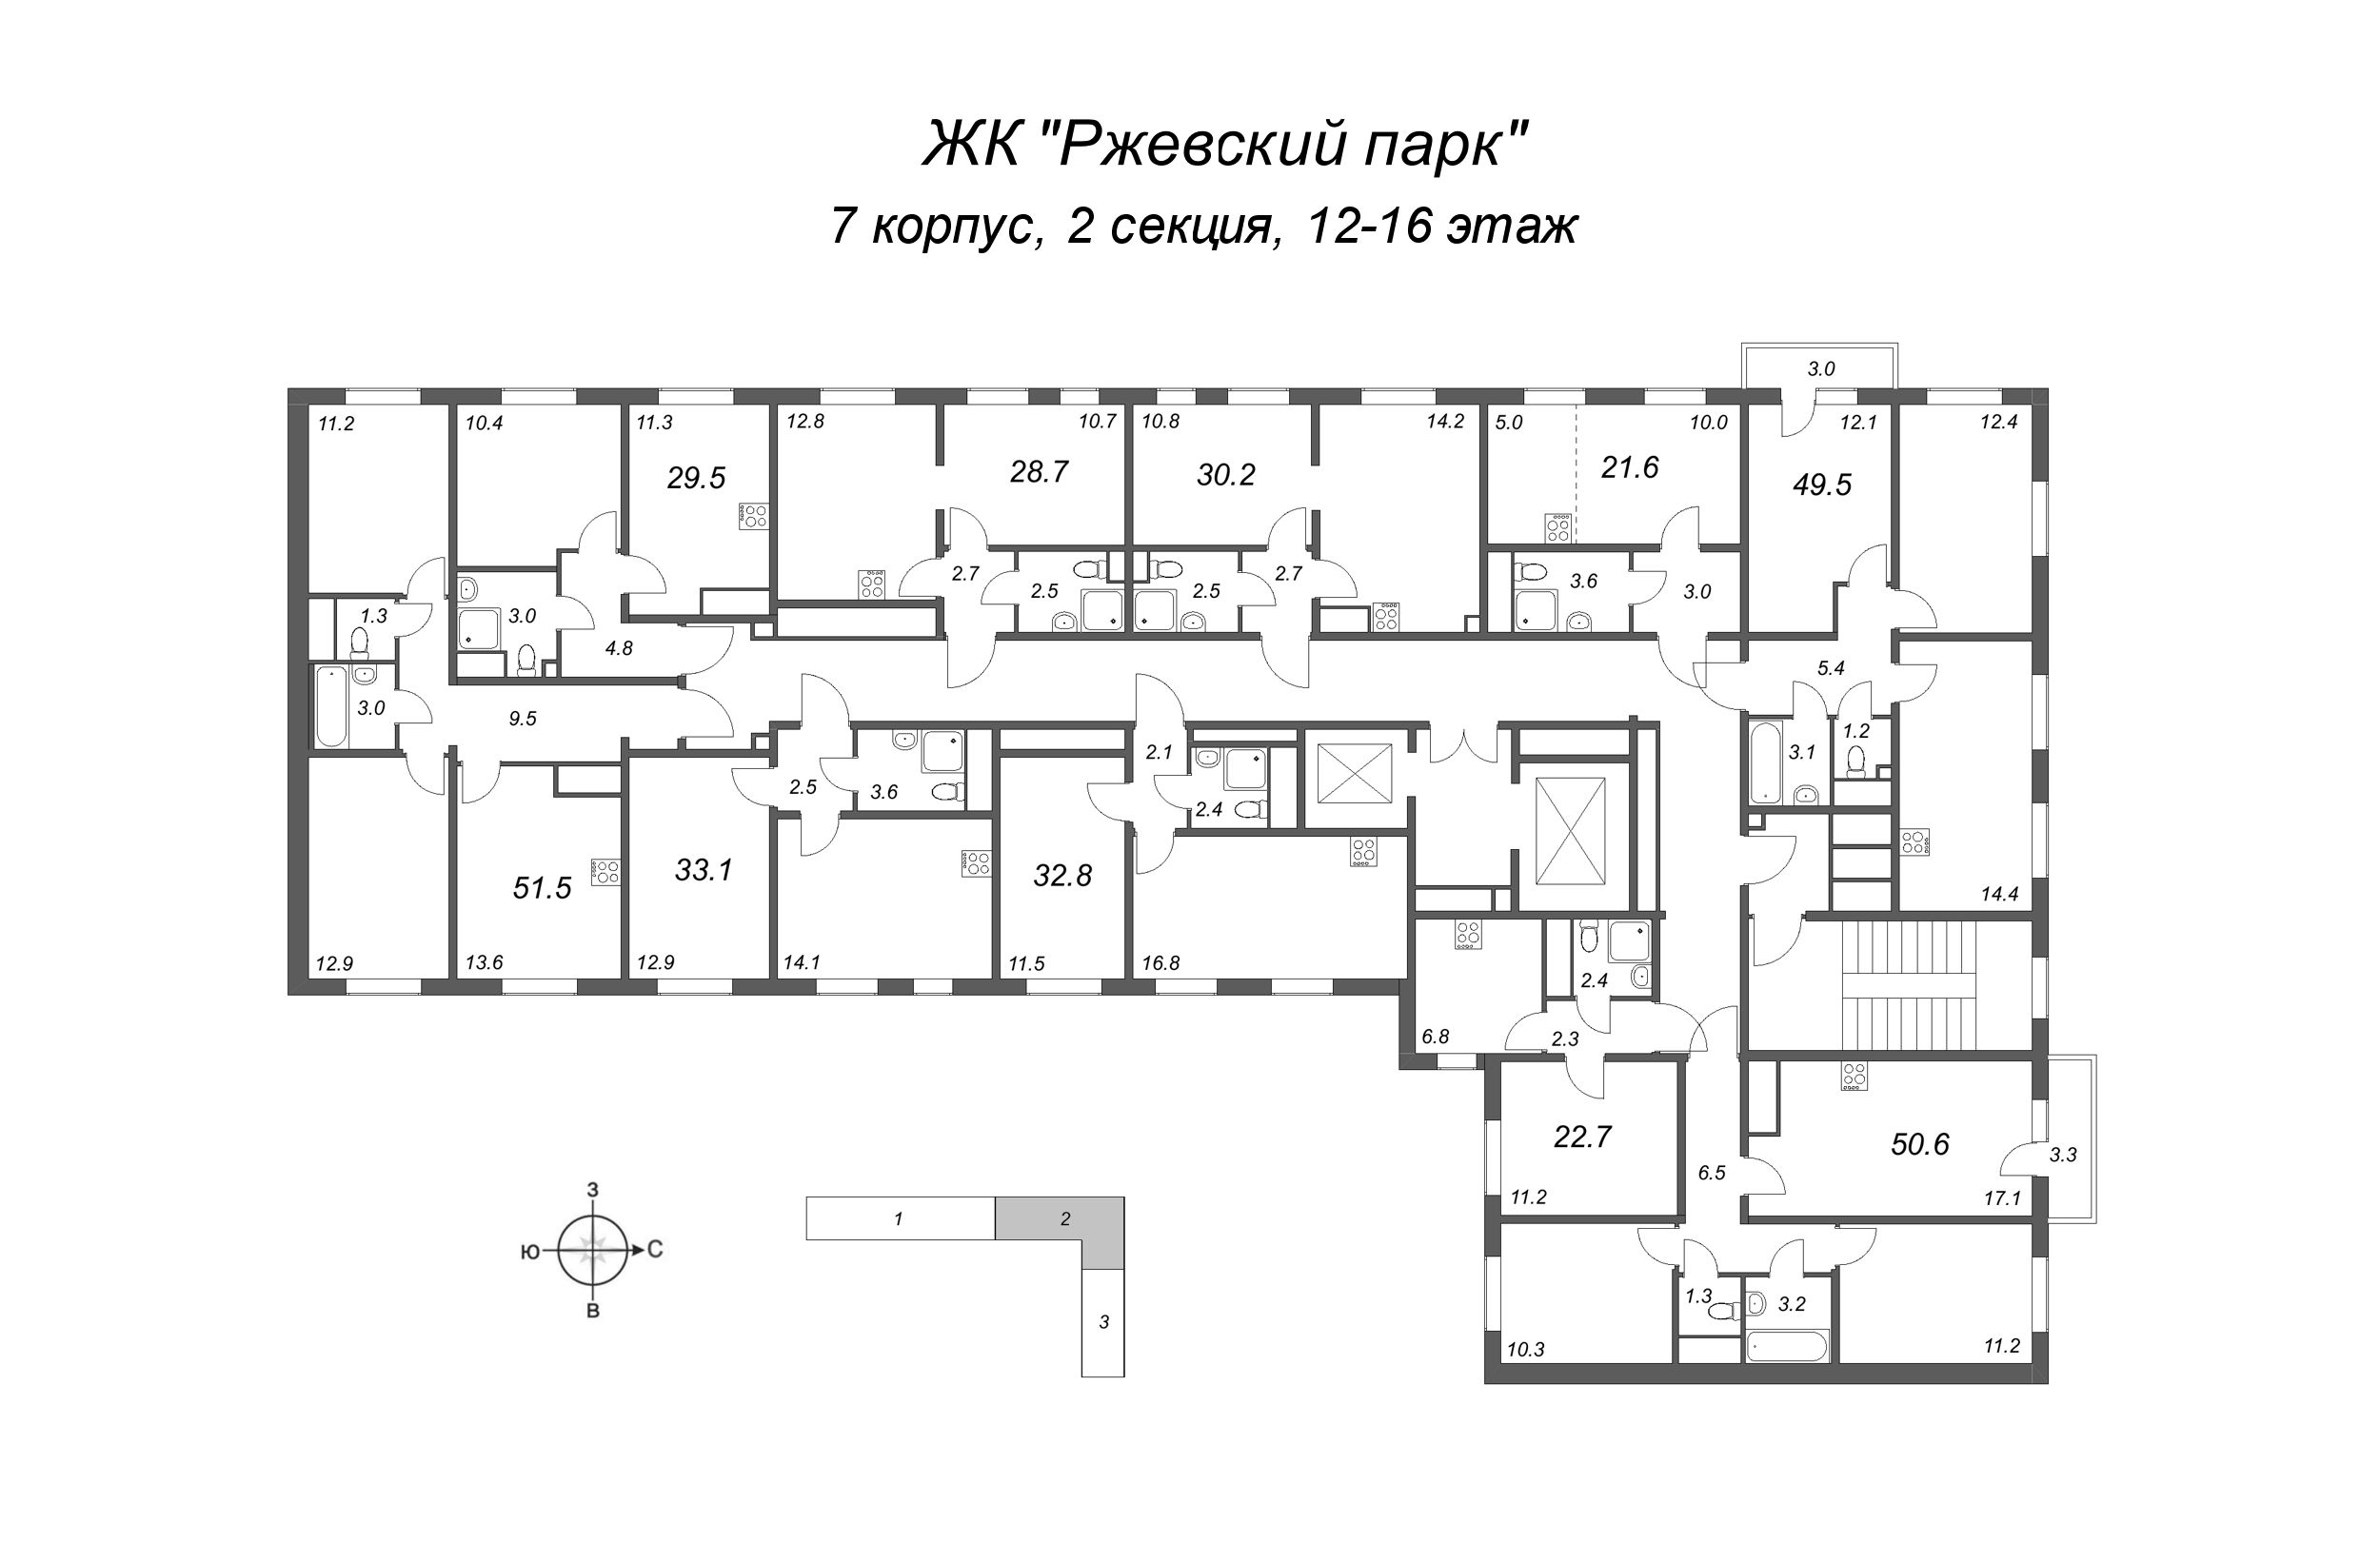 3-комнатная (Евро) квартира, 50.6 м² - планировка этажа